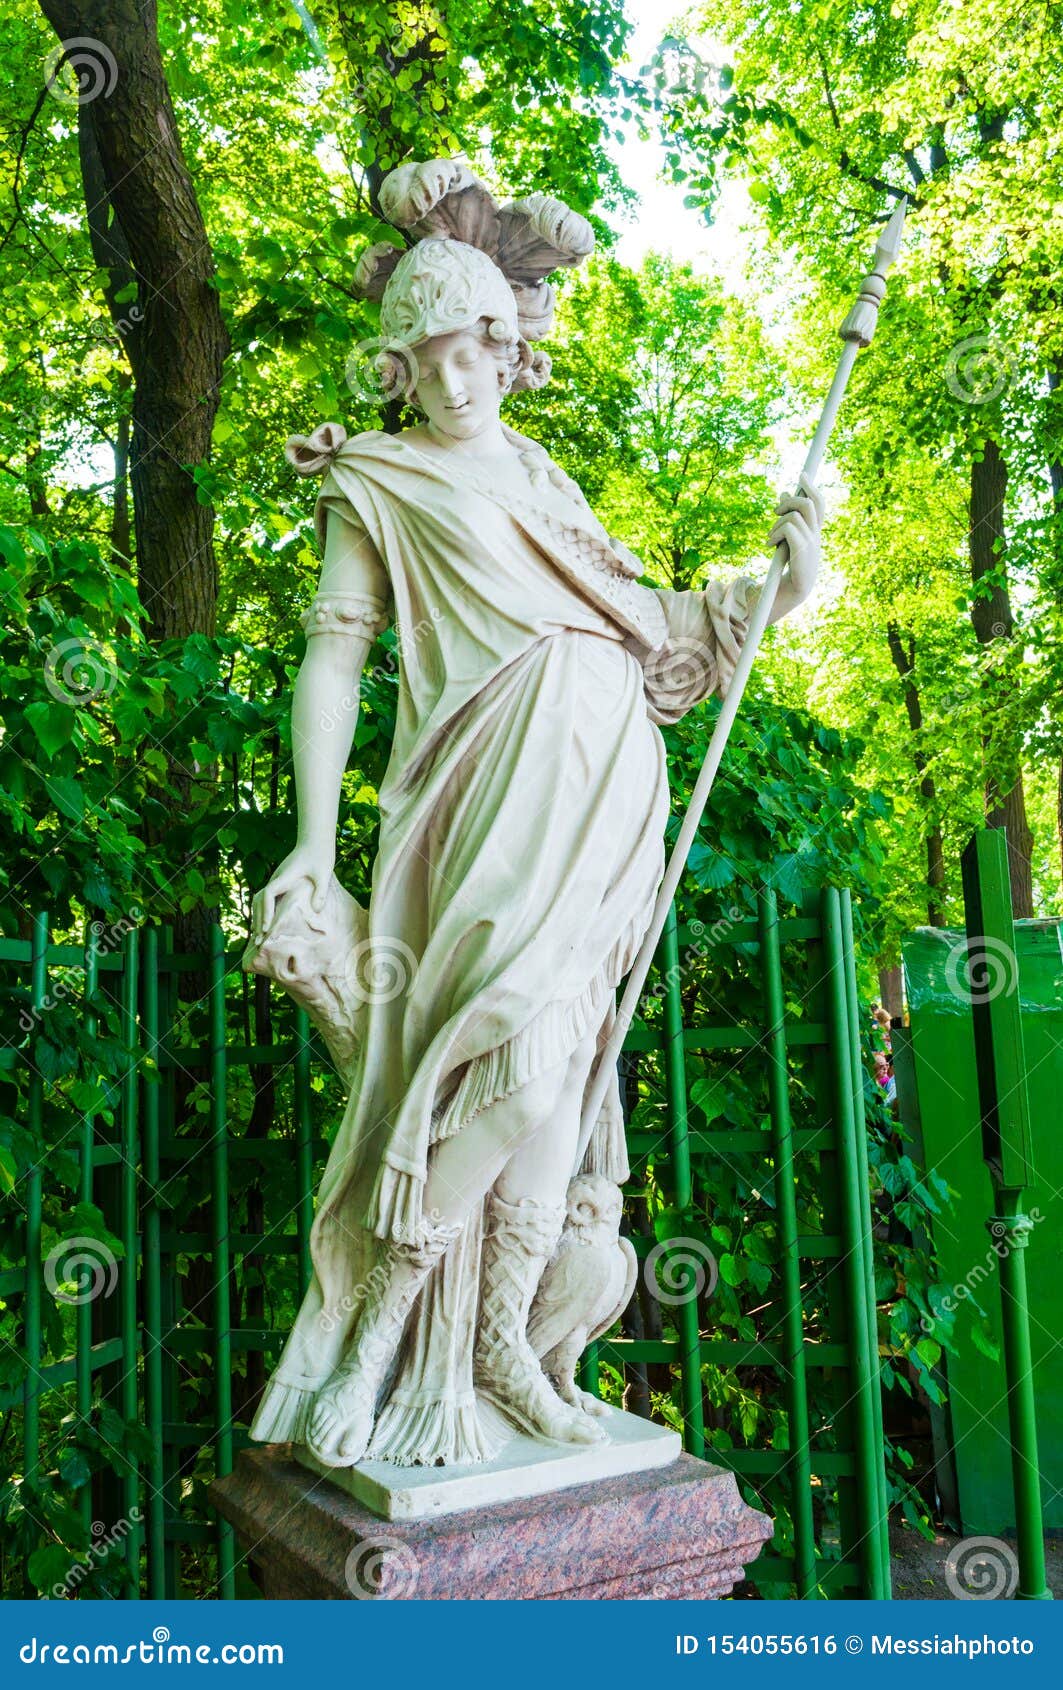 Summer Garden In St Petersburg, Russia.The Goddess Minerva, Dressed In ...
